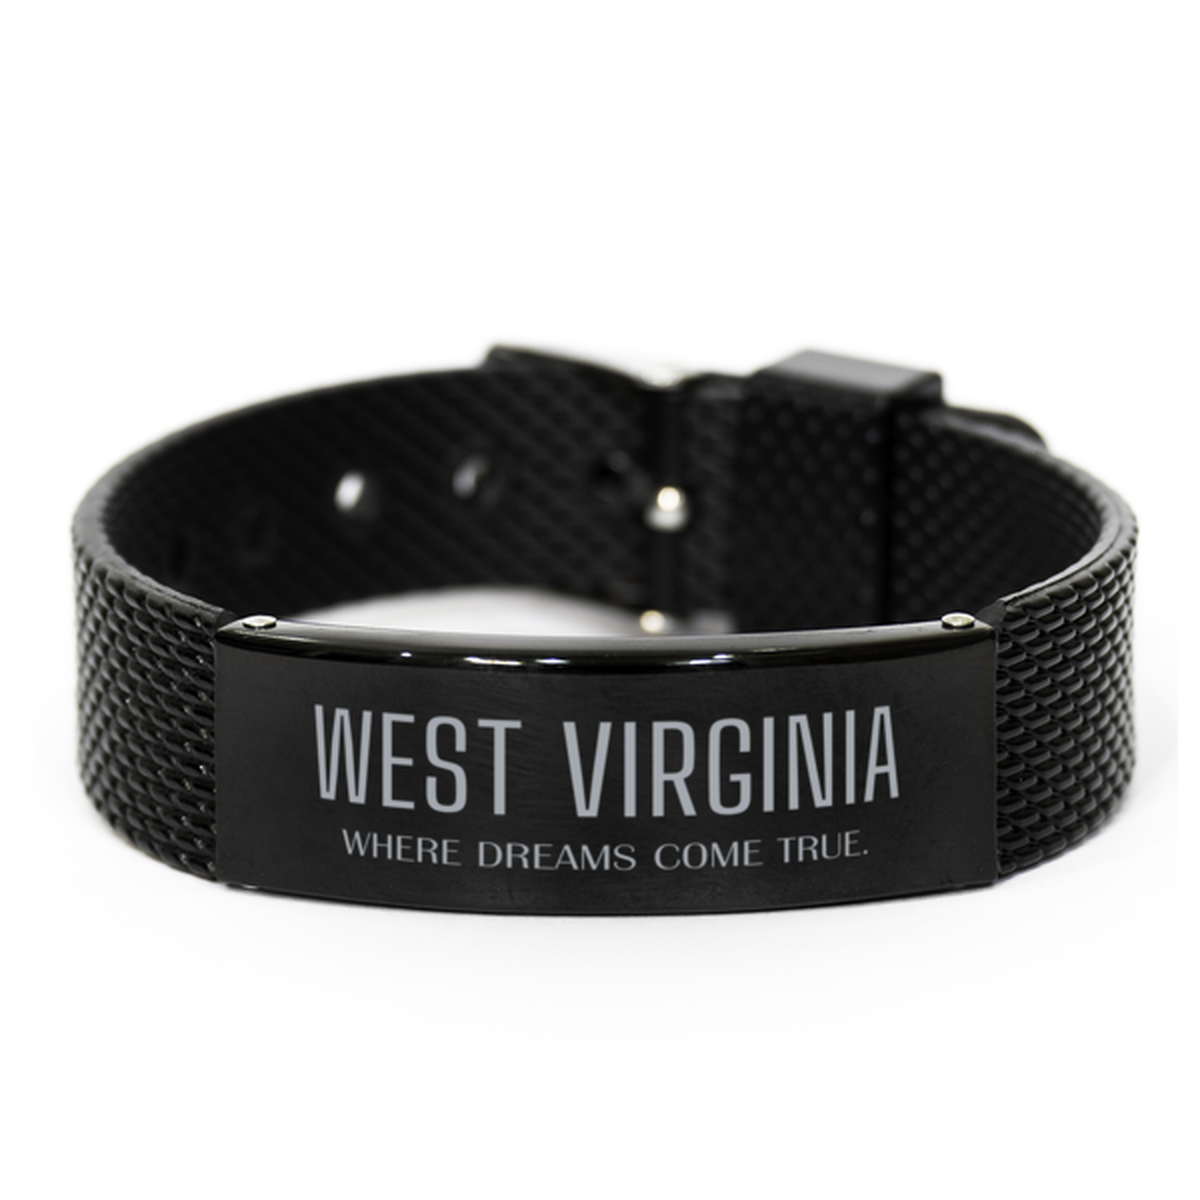 Love West Virginia State Black Shark Mesh Bracelet, West Virginia Where dreams come true, Birthday Inspirational Gifts For West Virginia Men, Women, Friends